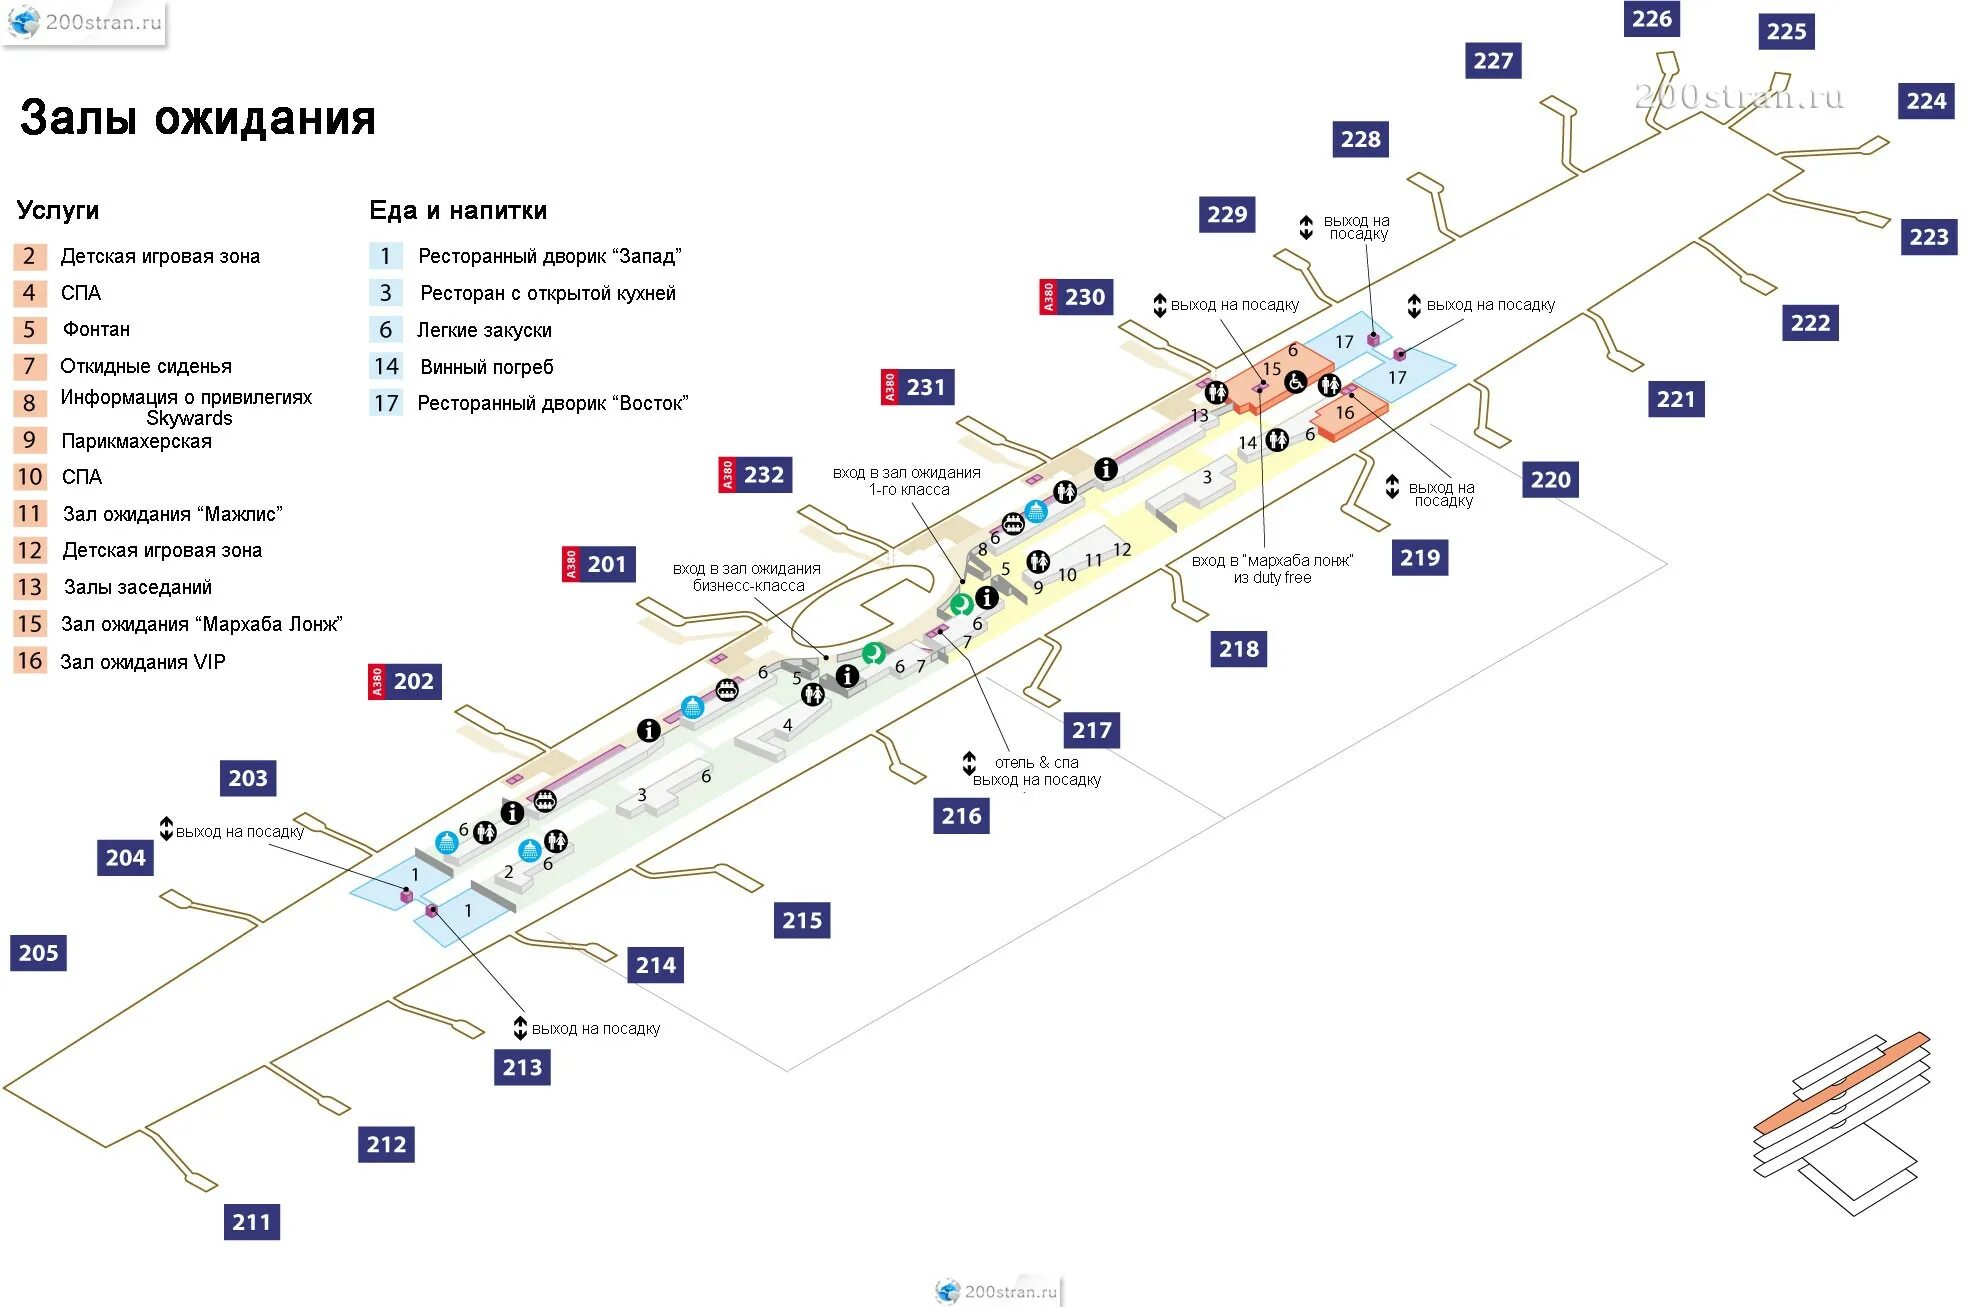 Схемы терминалов дубаи. Схема аэропорта Дубай терминал 1. Карта аэропорта Дубай терминал 3. Аэропорт Дубай терминал 2 схема. План аэропорта Дубай терминал 3.